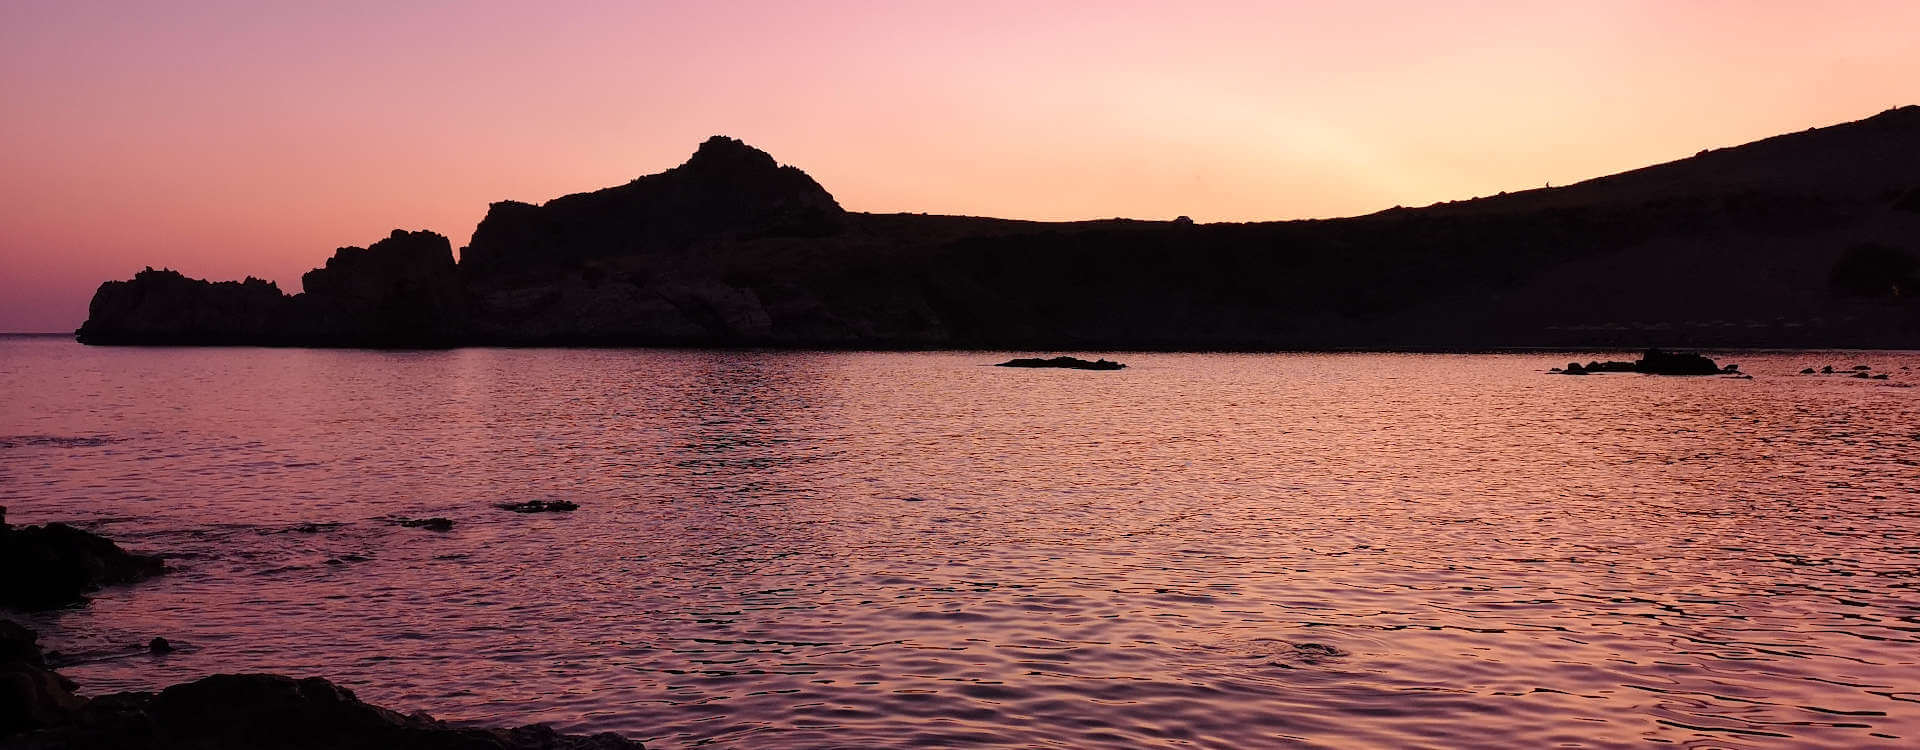 Sunset over the sleepy dragon rock at Agios Pavlos home of Yoga Rocks holidays